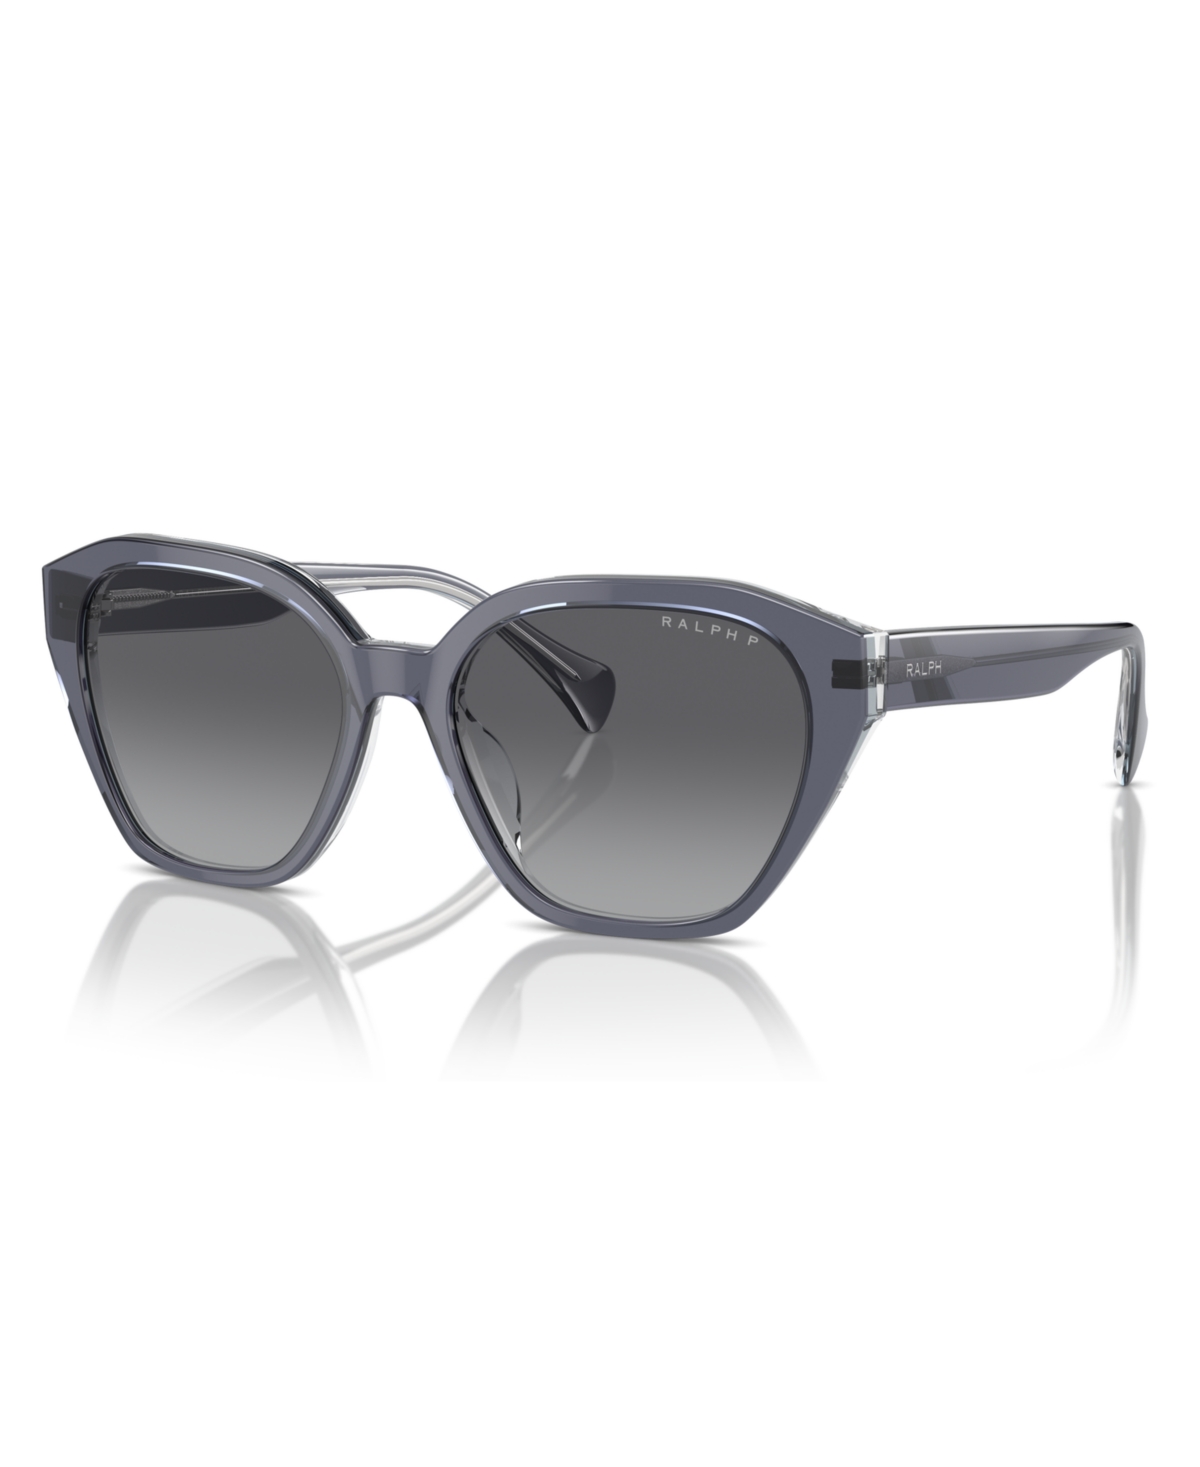 Women's Polarized Sunglasses, Ra5315U - Transparent Gray